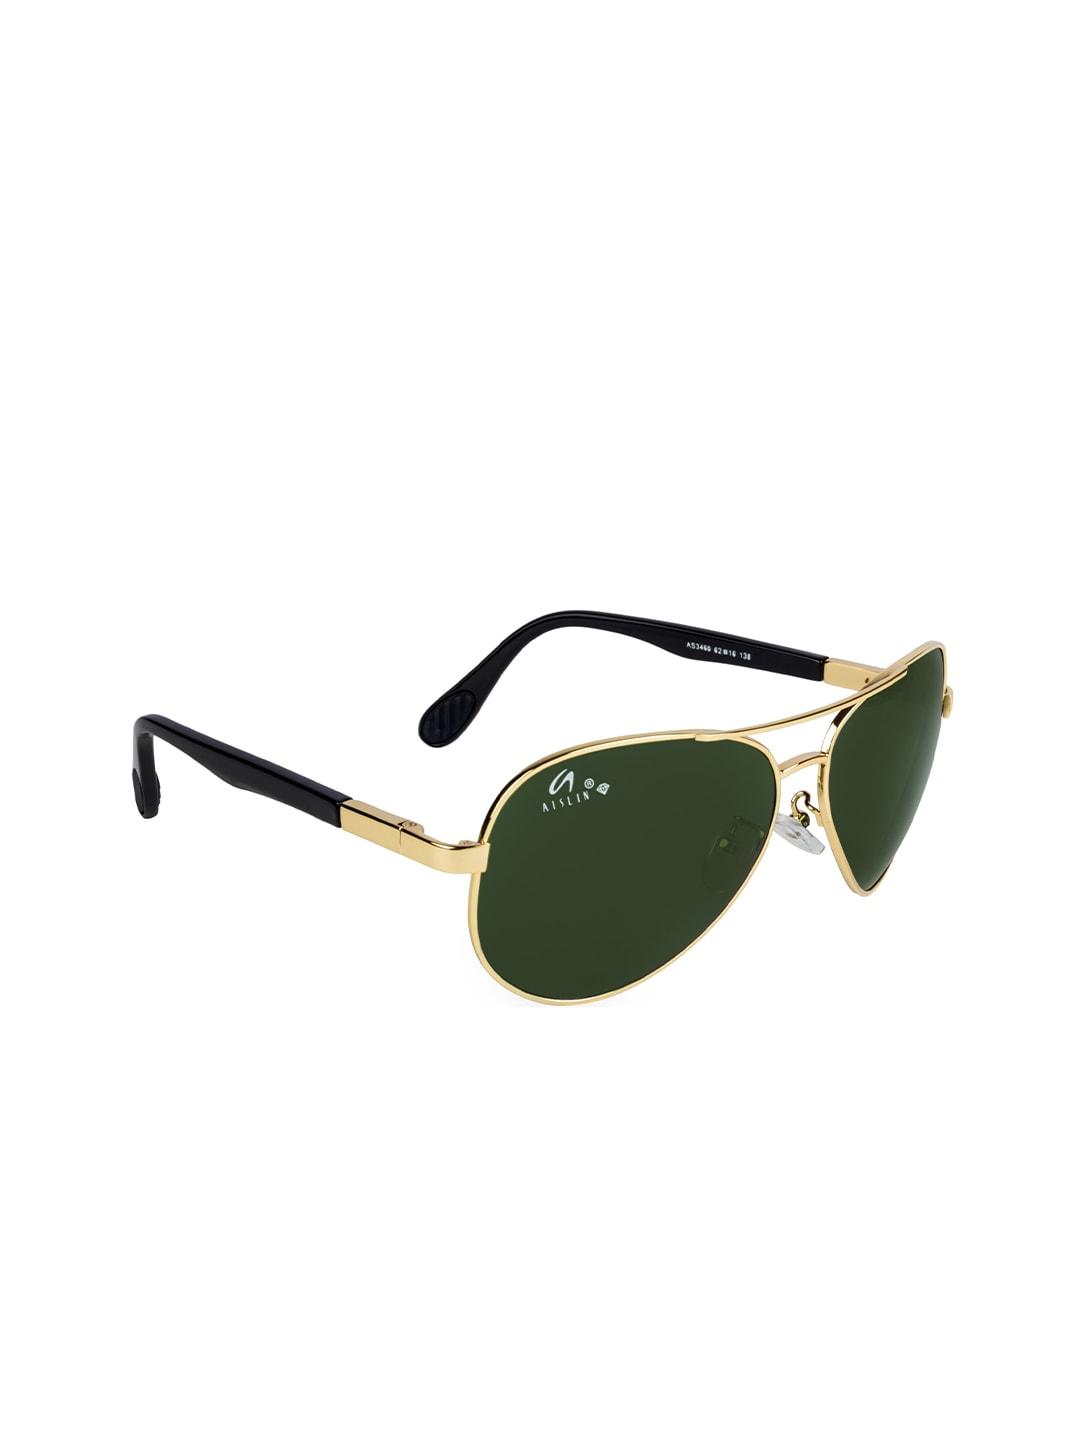 aislin men green lens aviator sunglasses with uv protected lens 14115-5-as-3460